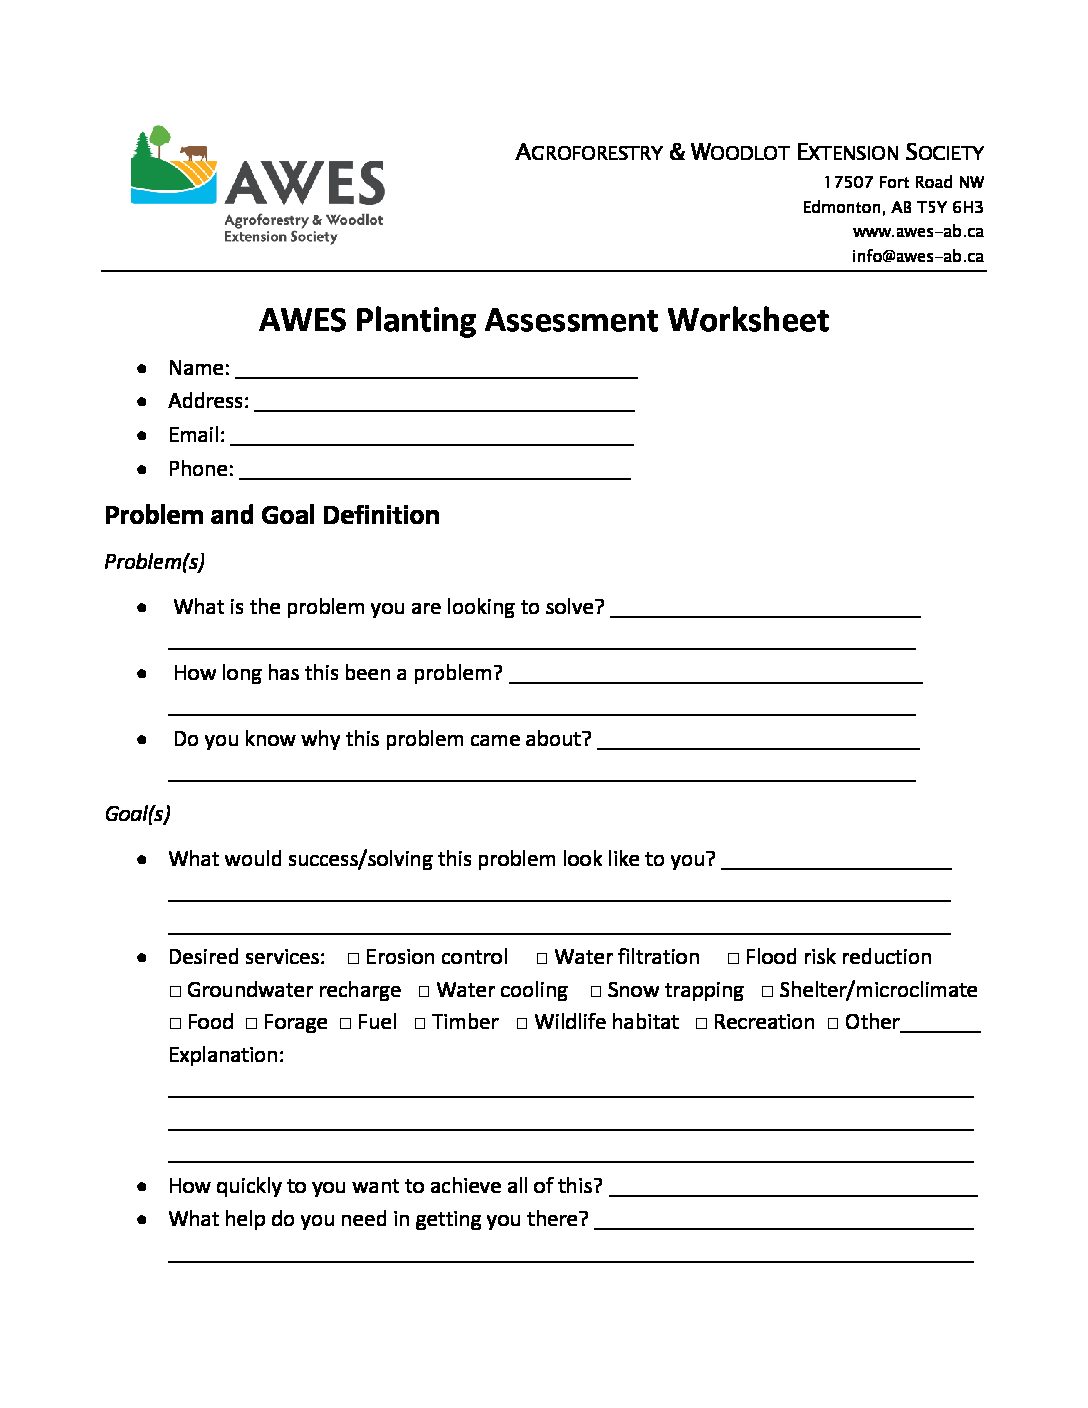 AWES Planting Assessment Worksheet